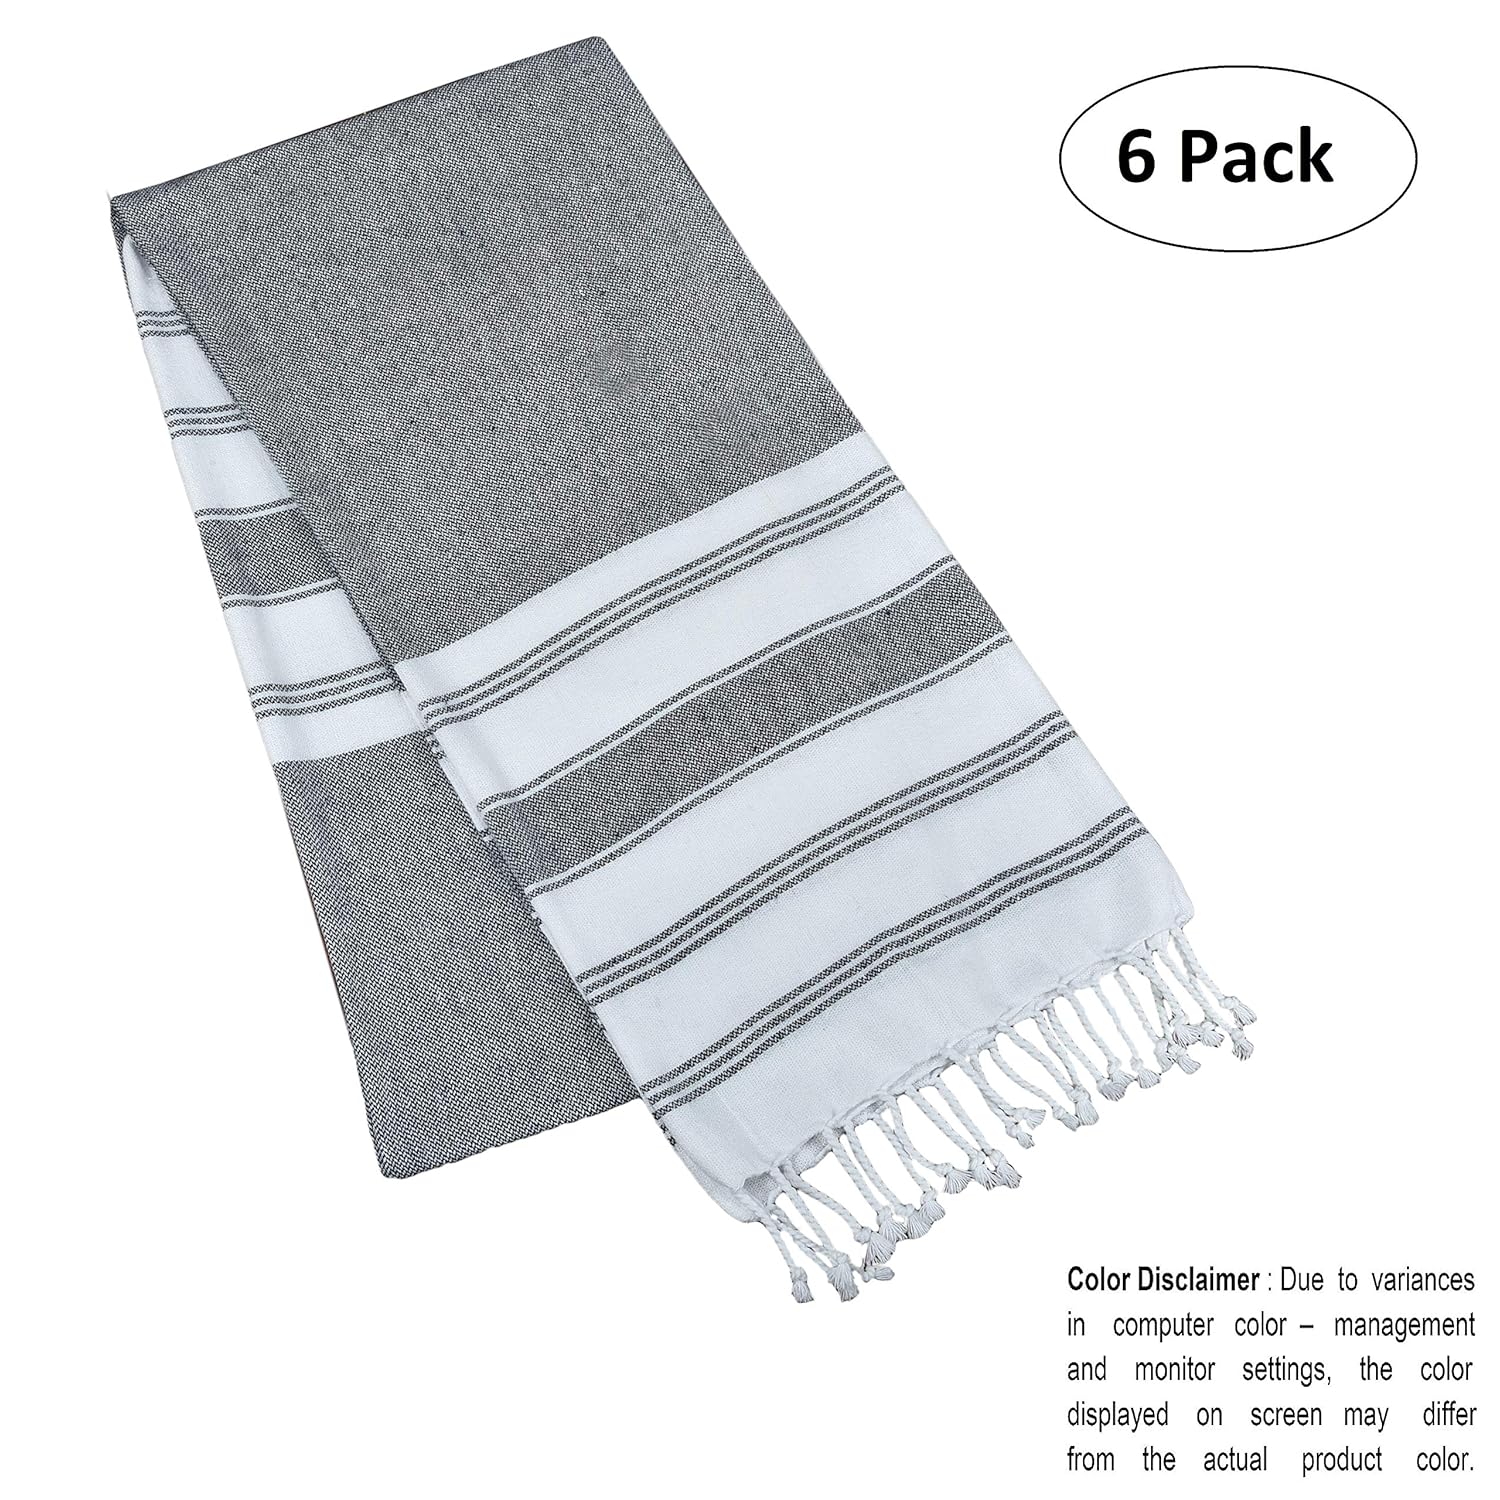 thinkstar Peshtemal Turkish Towel 100% Cotton Beach Towels Oversized 36X71 Set Of 6, Cotton Beach Towels For Adults, Soft Durable Abs…